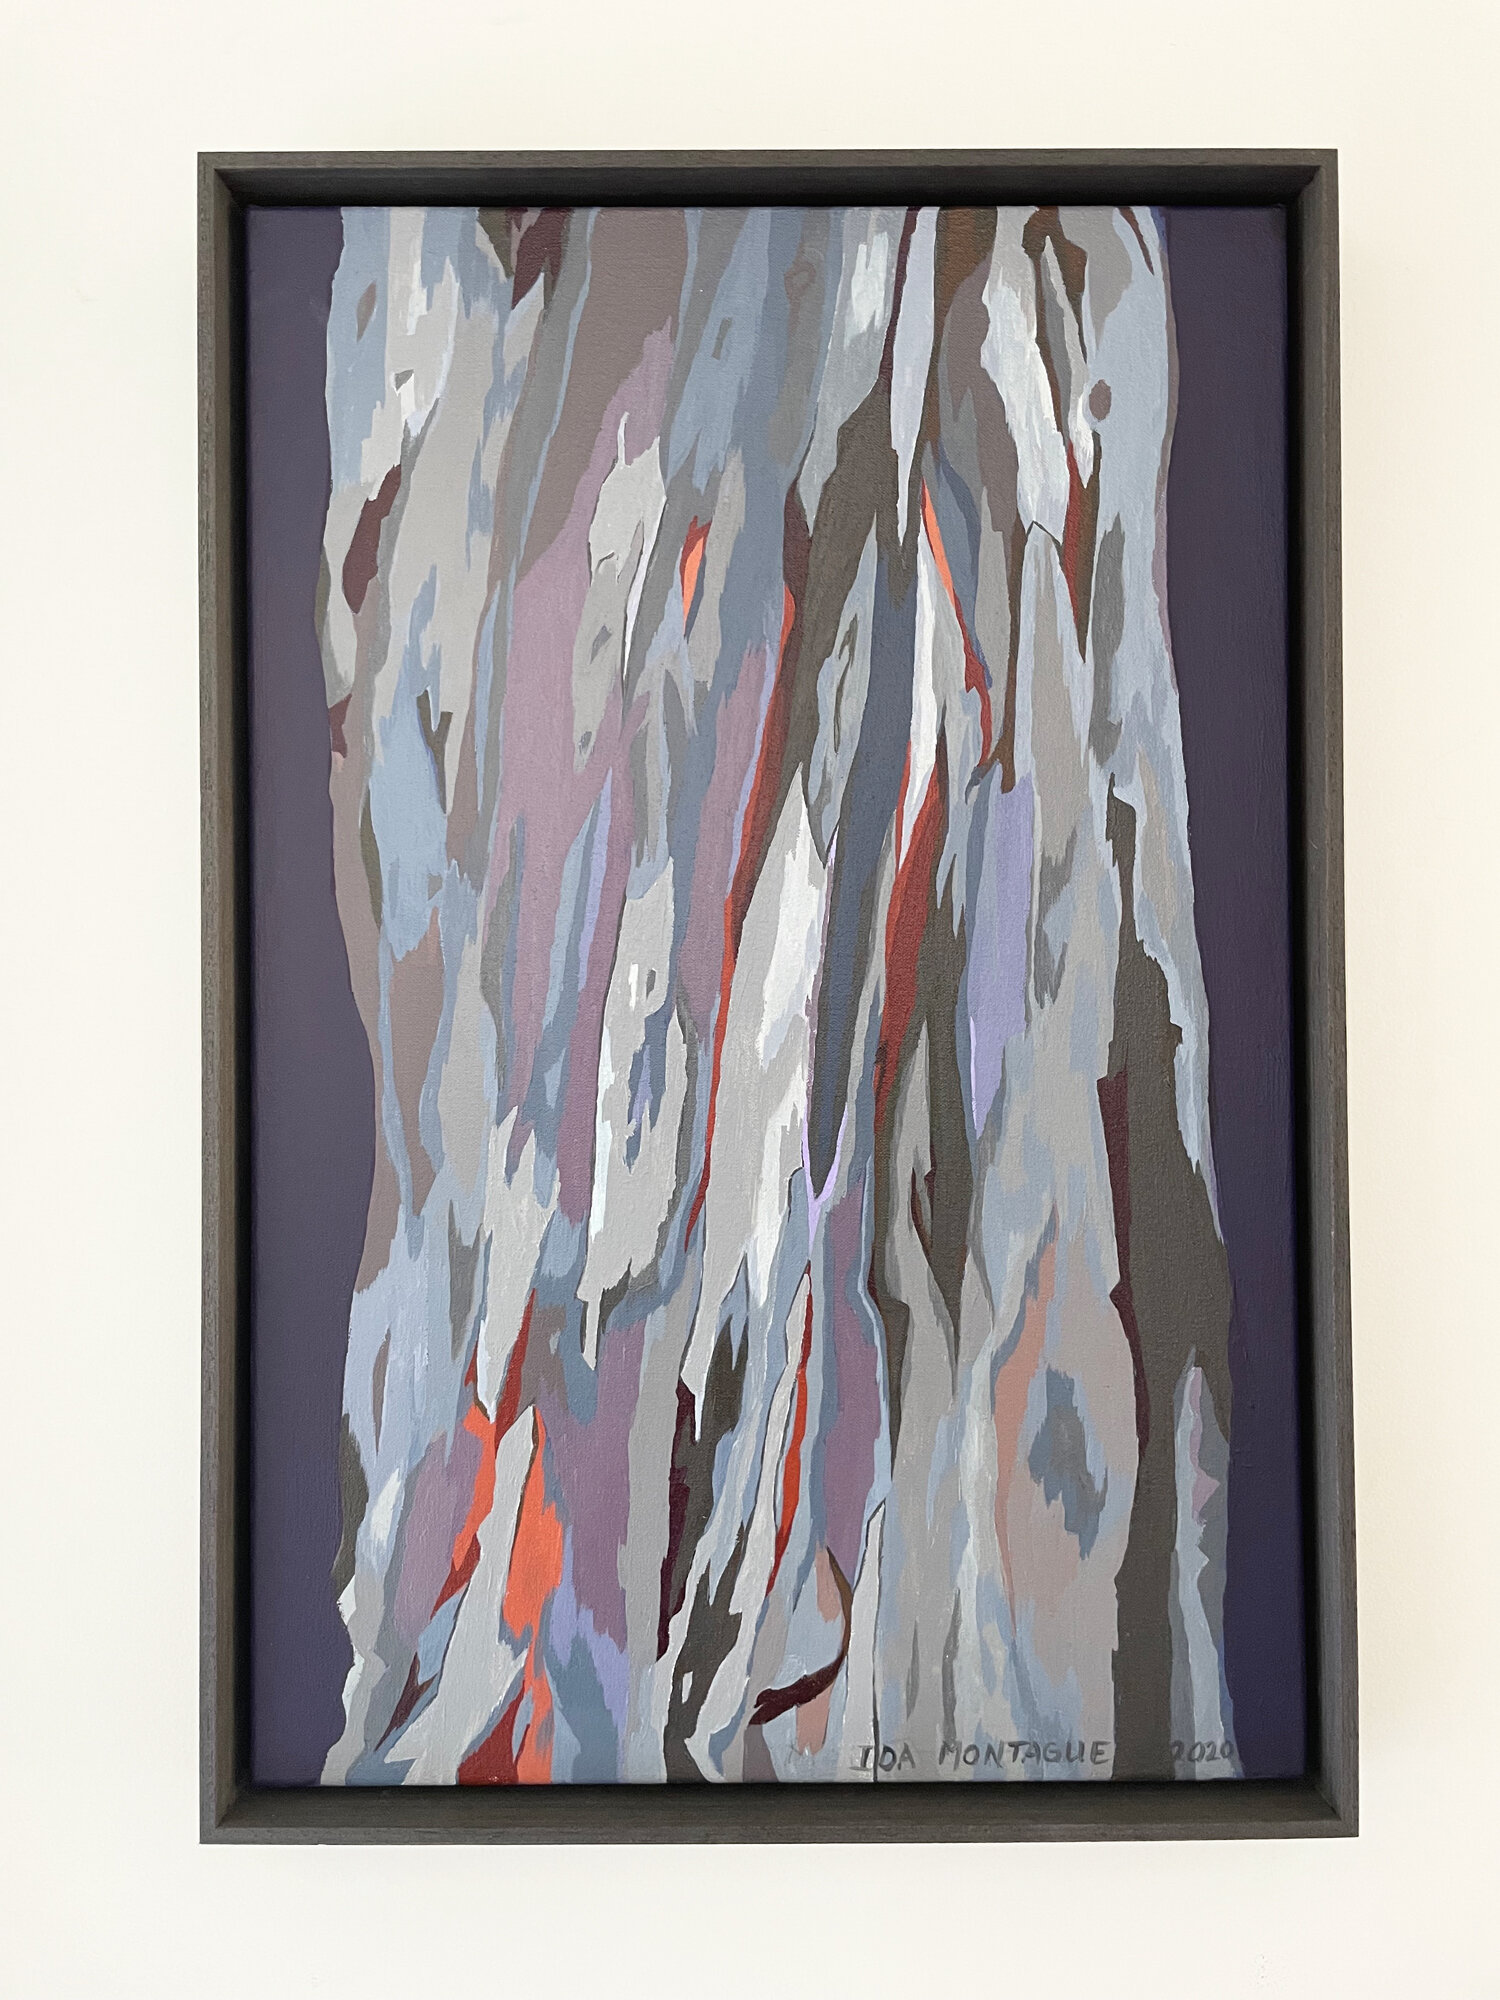    Alpine Blues I  , Acrylic polymer on stretched canvas (black timber framed), 90 x 60cm © Ida Montague.  ENQUIRE  